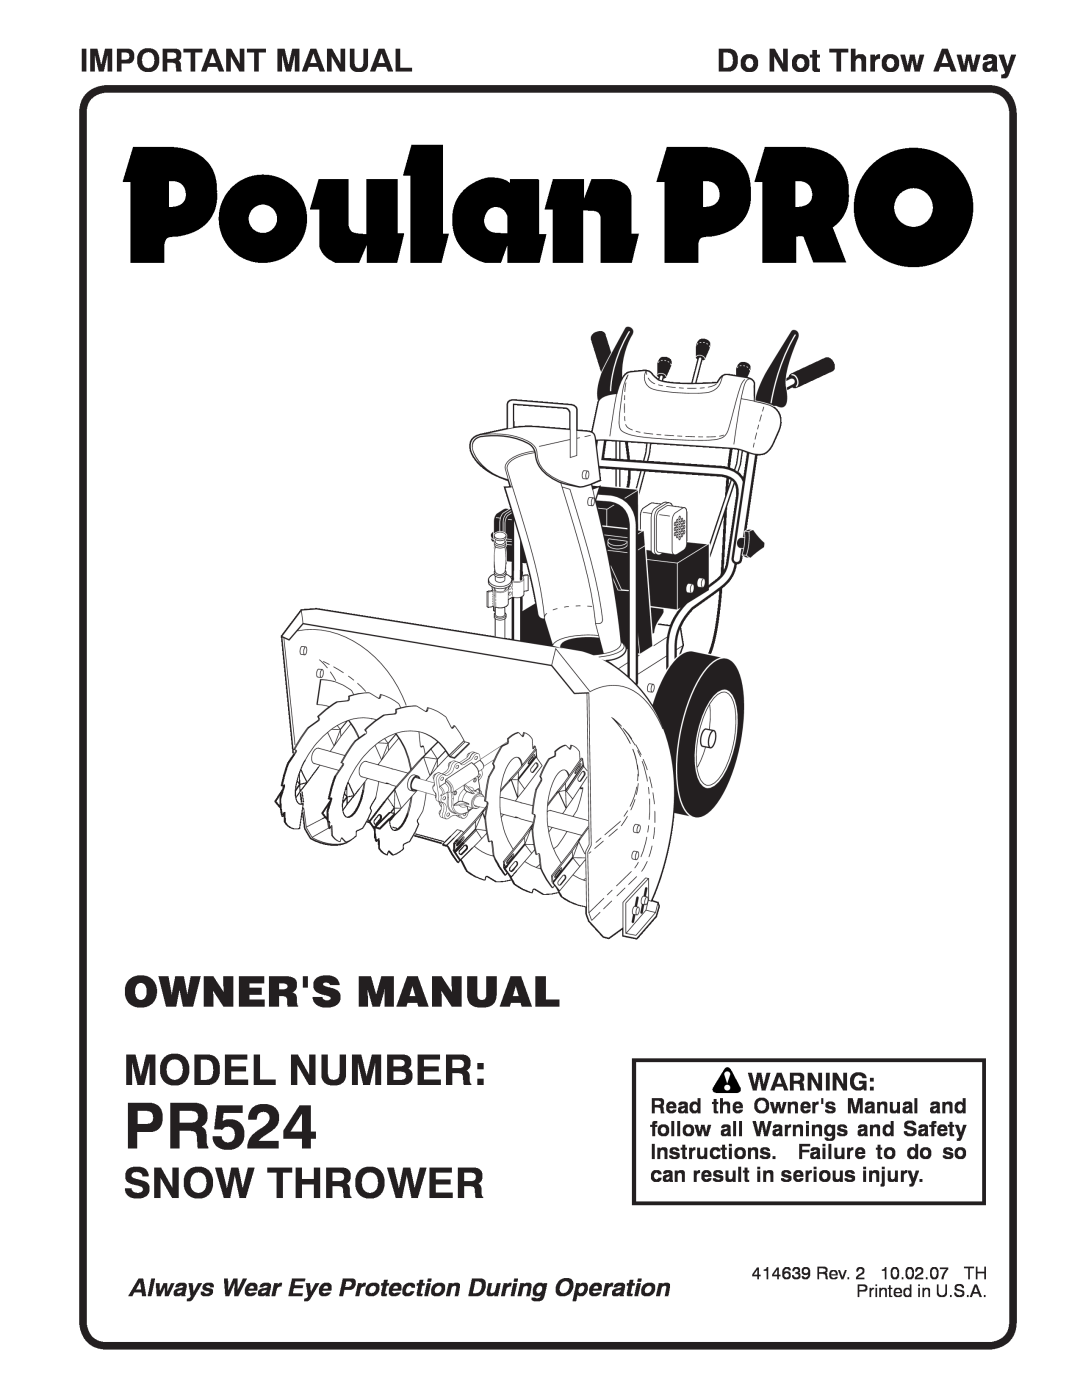 Poulan 414639 owner manual Snow Thrower, Important Manual, PR524, Do Not Throw Away 